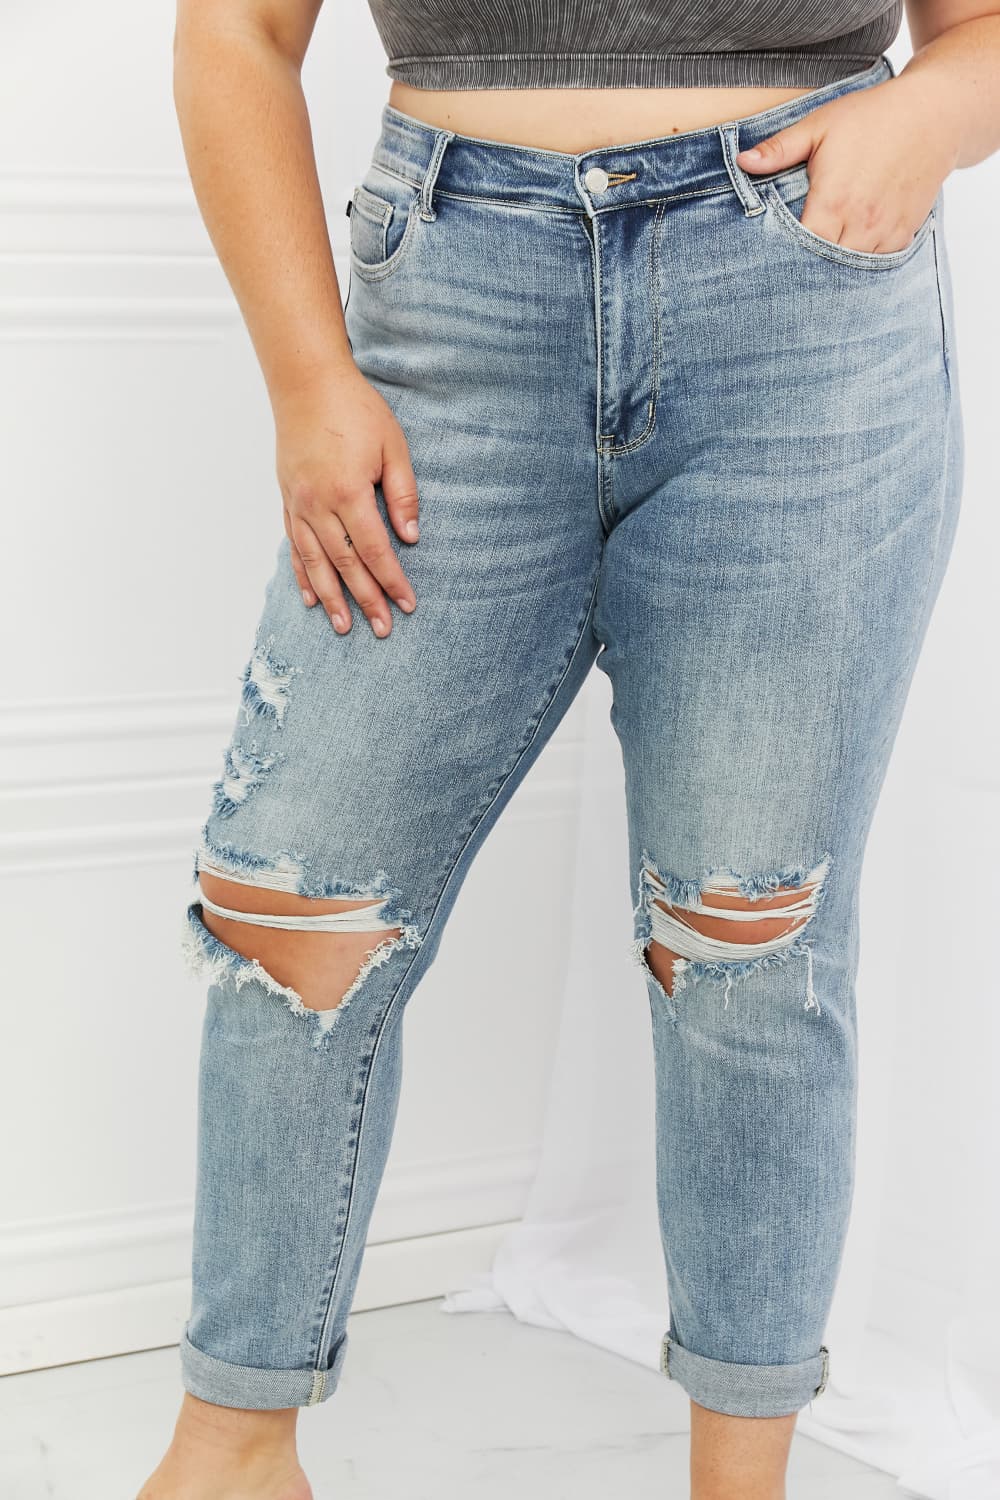 Plus Size, Judy Blue, Mid-Rise Ripped Double Cuff Boyfriend Jeans, 82458